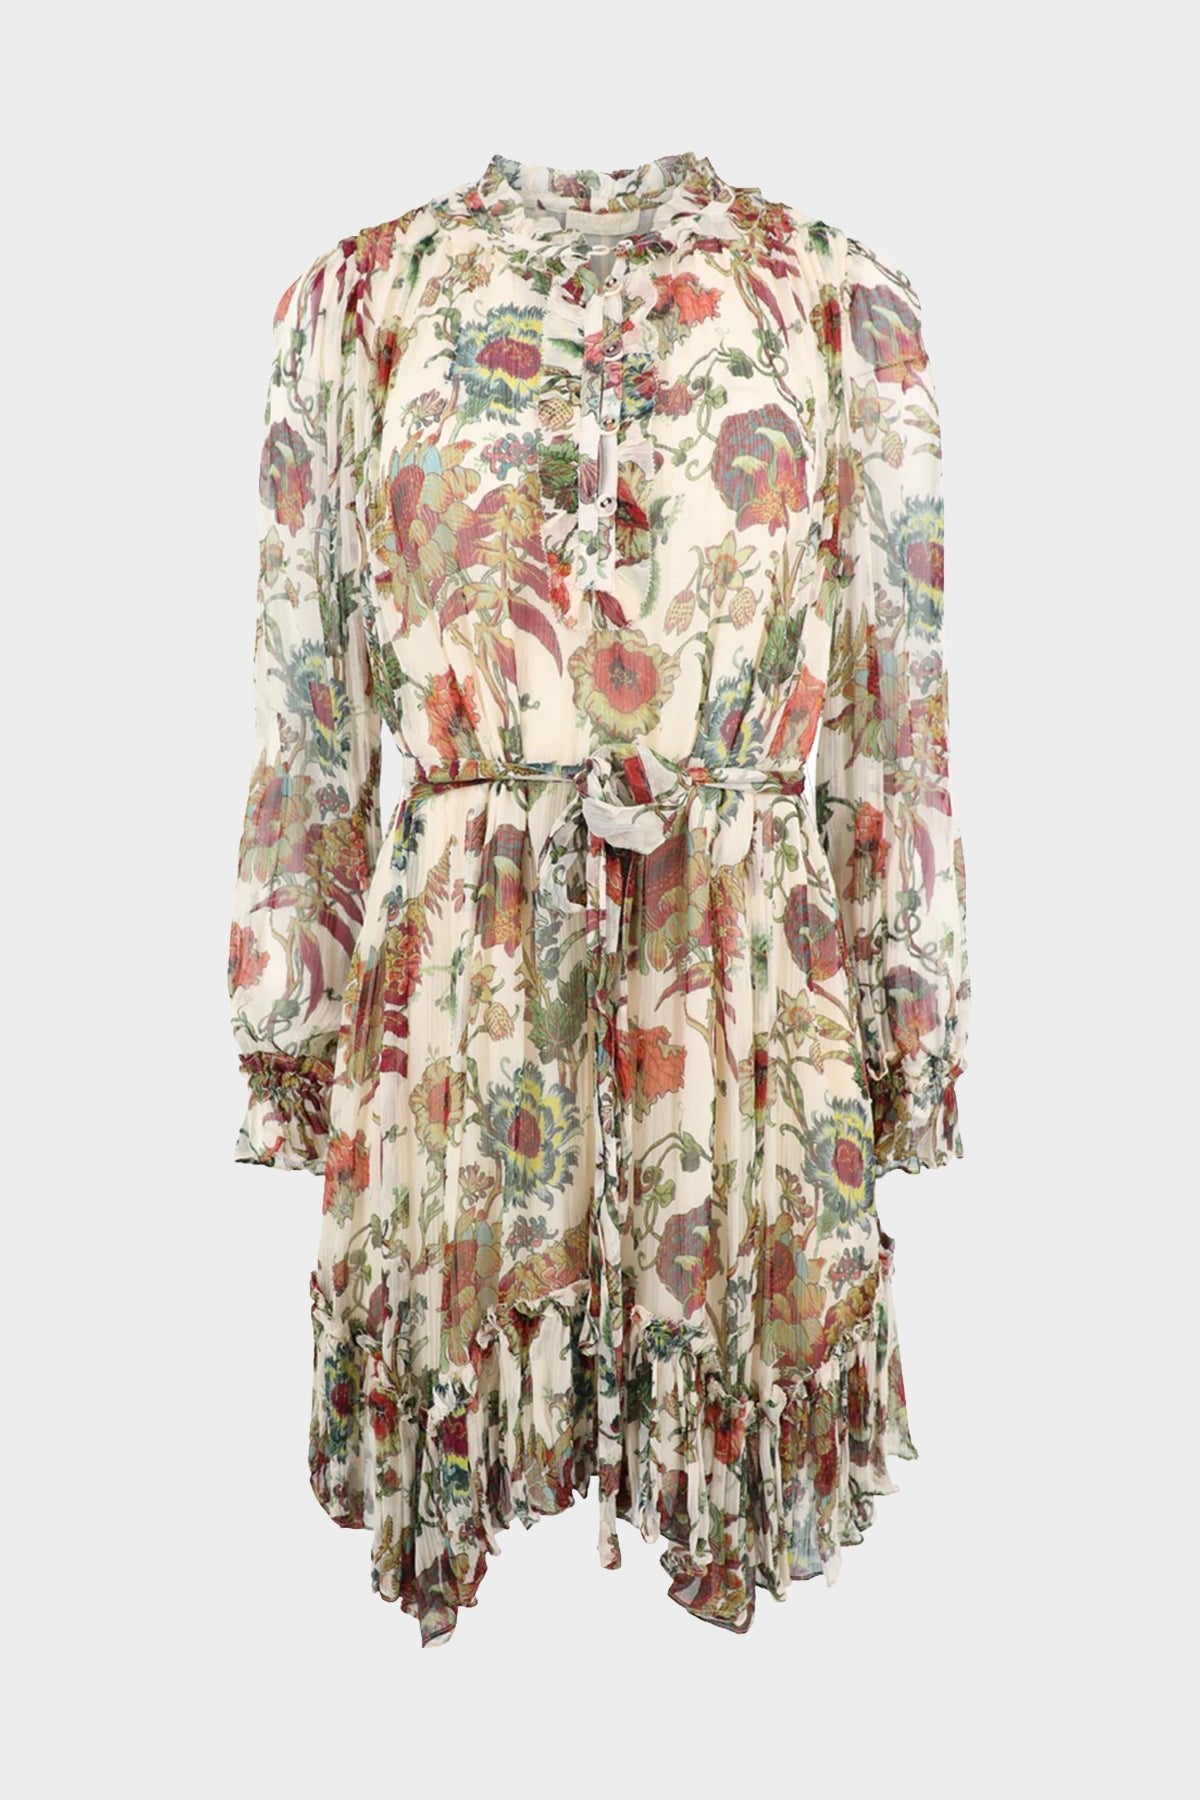 Anais Long Sleeve Dress in Freesia - shop-olivia.com